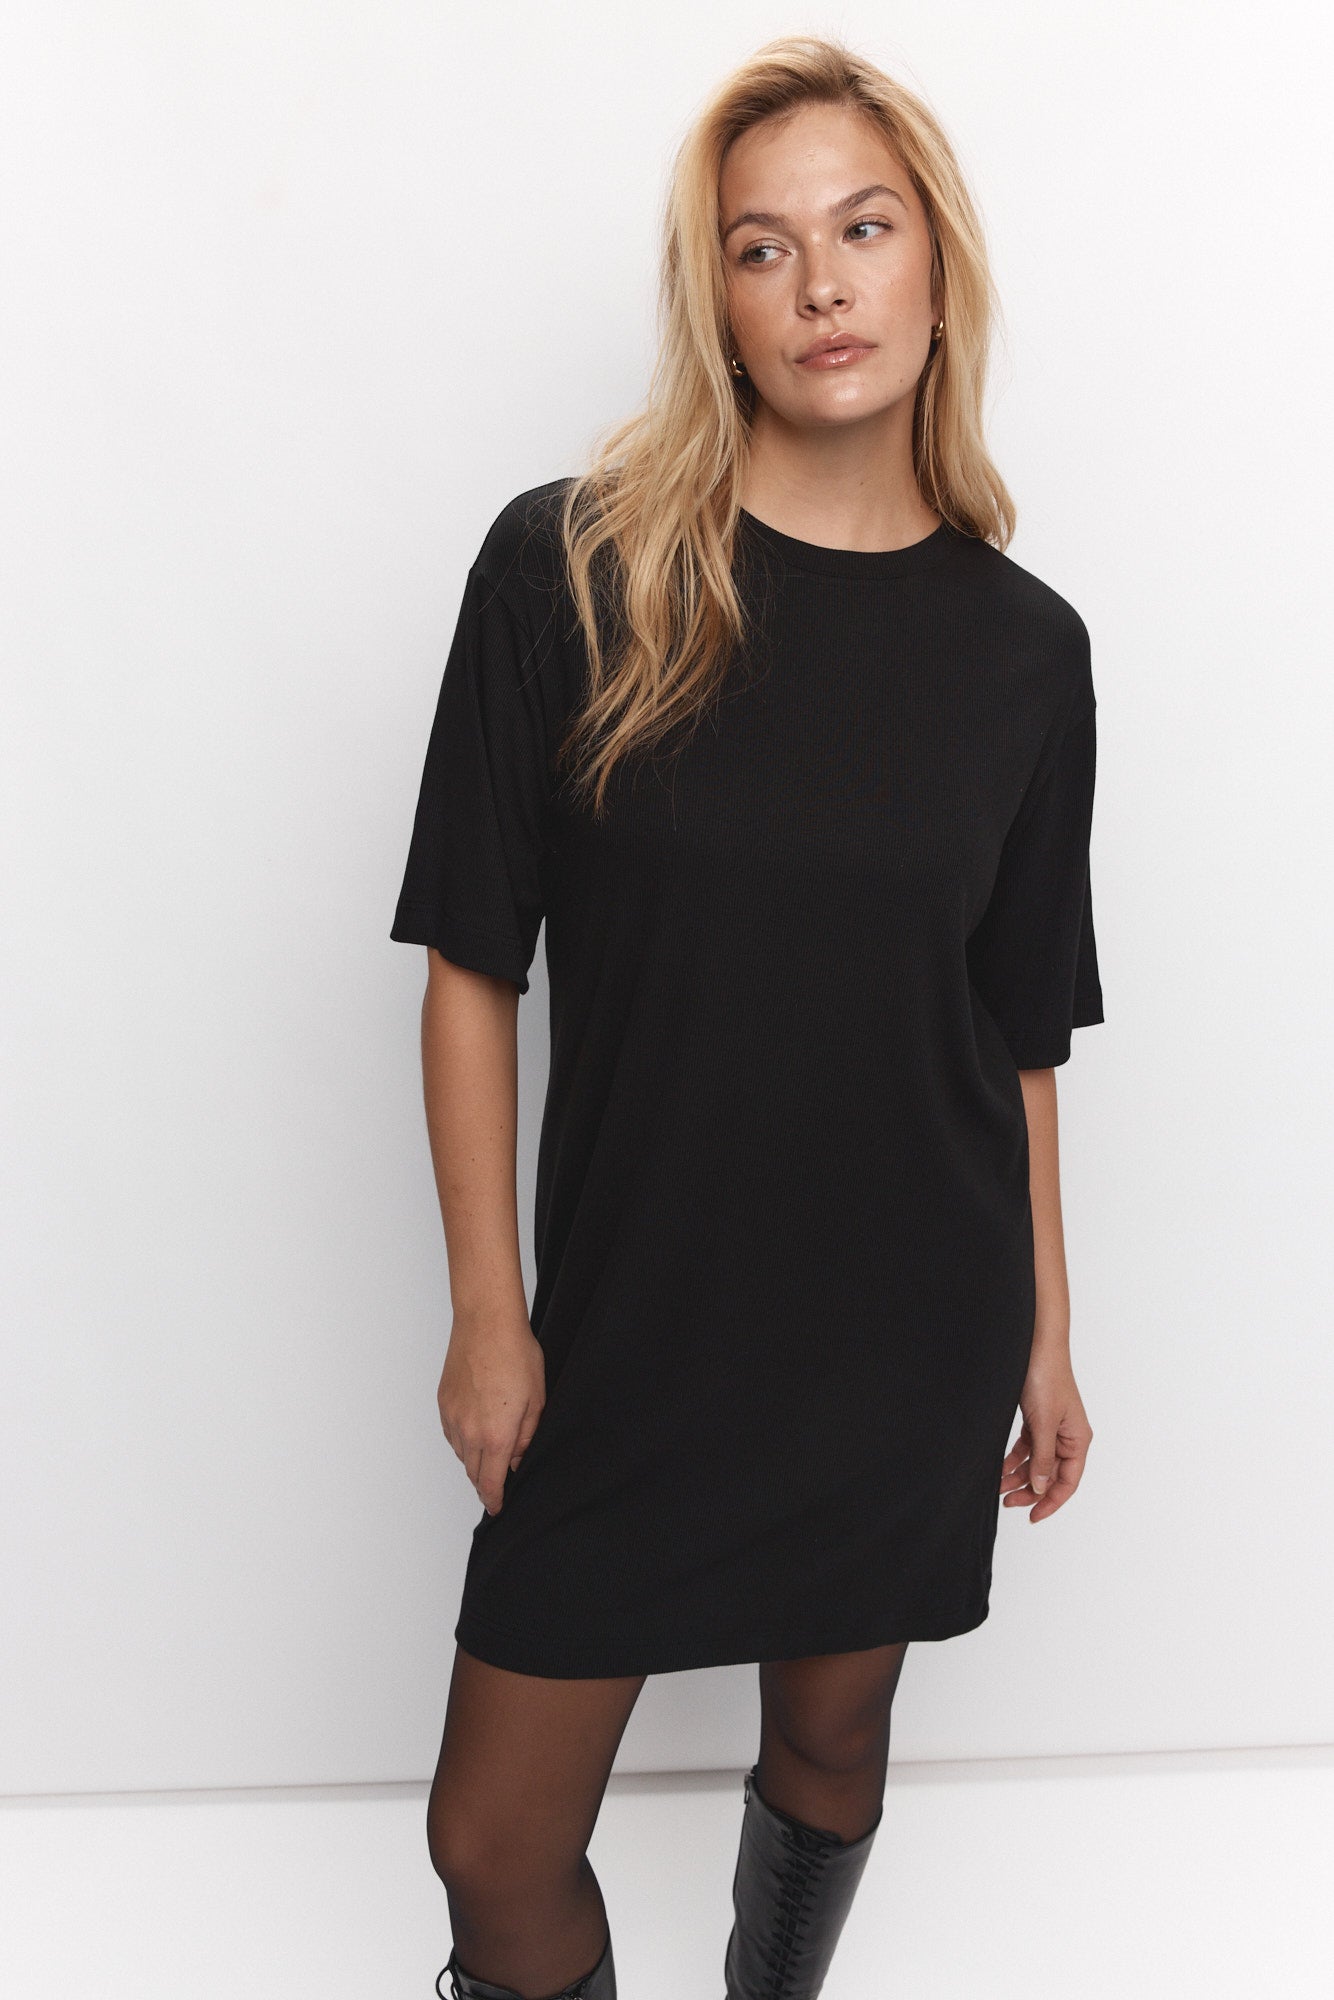 Loose black t-shirt dress | Kara